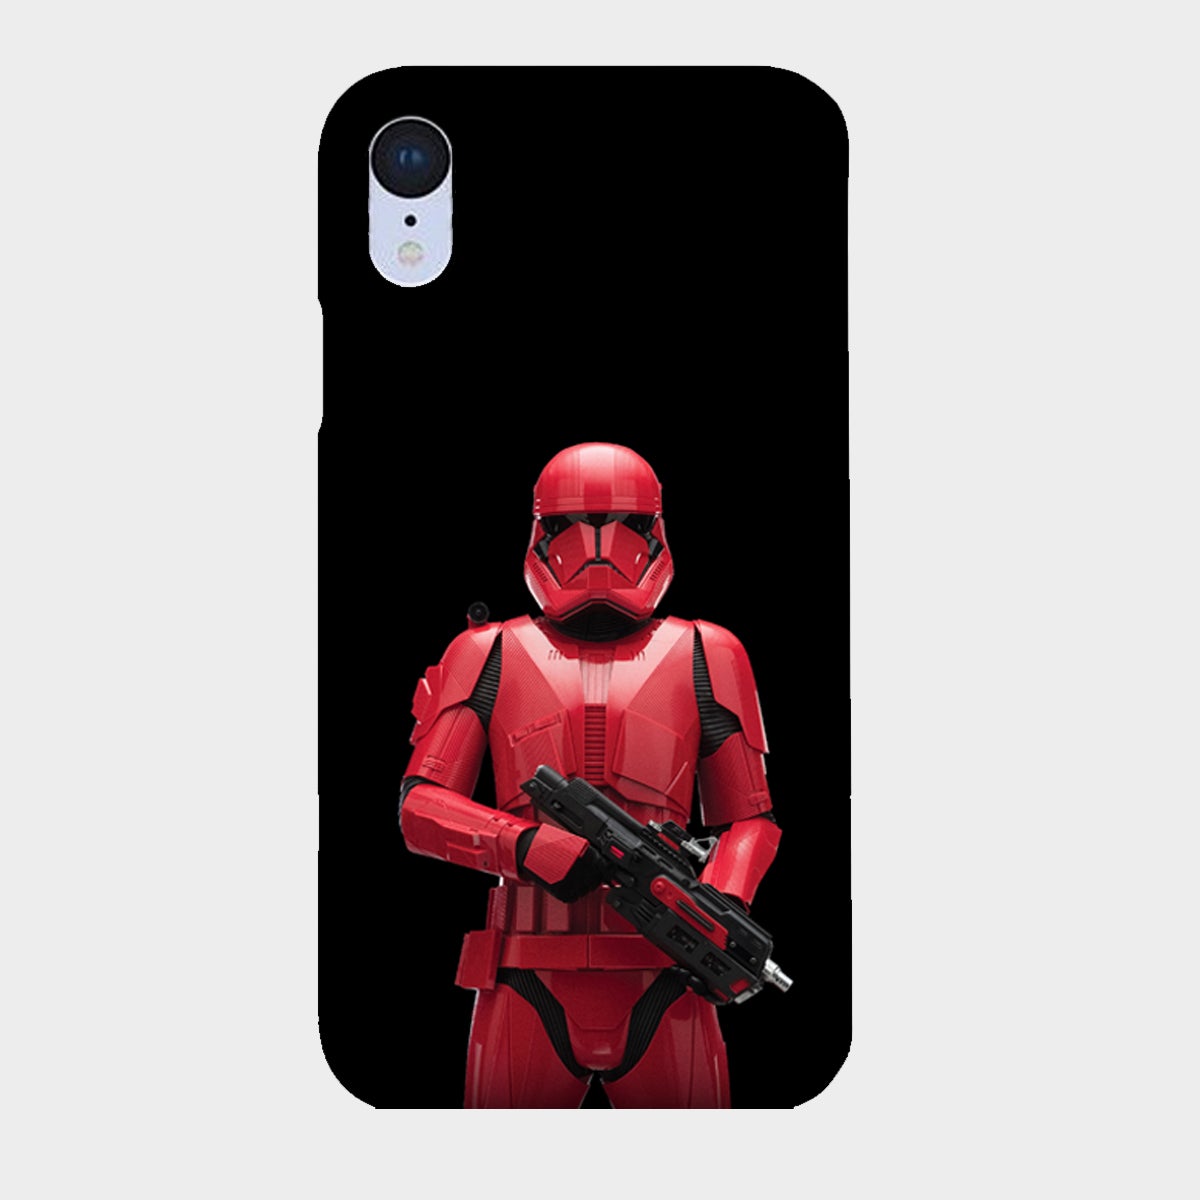 Star Wars - Darth Vader - Red - Mobile Phone Cover - Hard Case